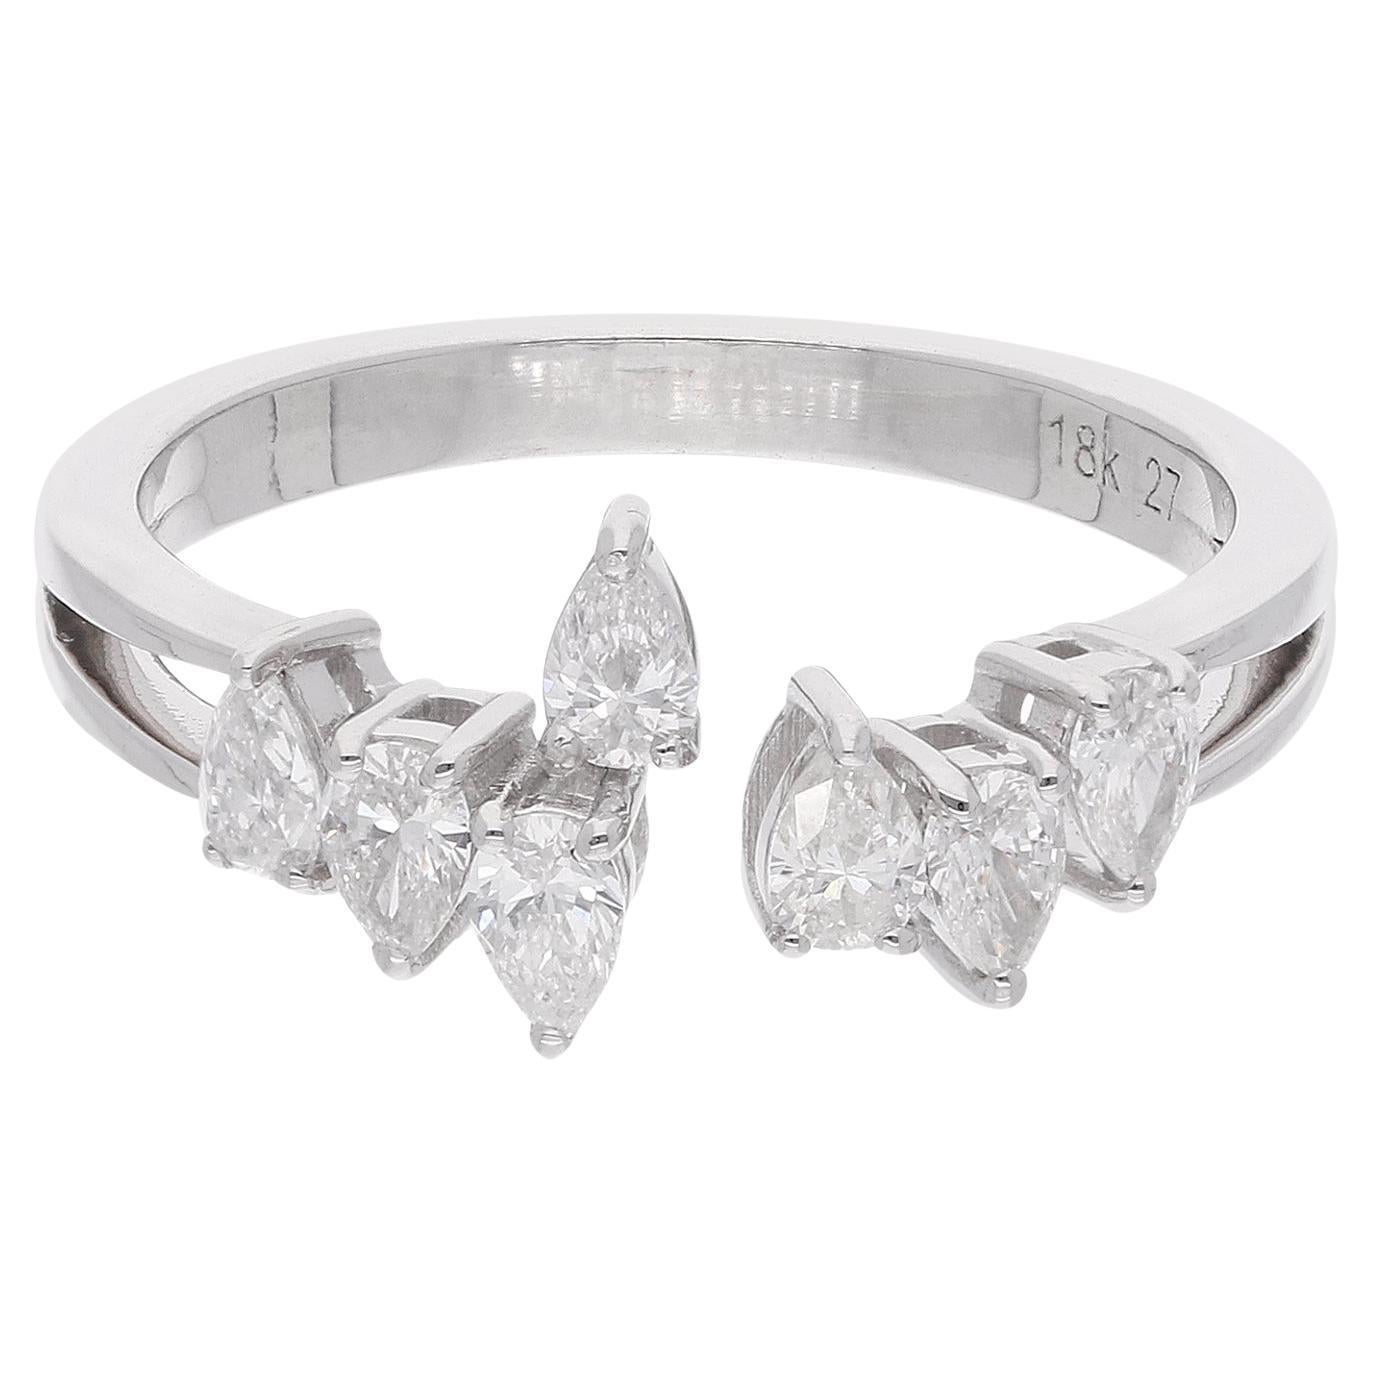 0.55 Carat Pear Diamond Promise Ring Solid 18 Karat White Gold Handmade Jewelry